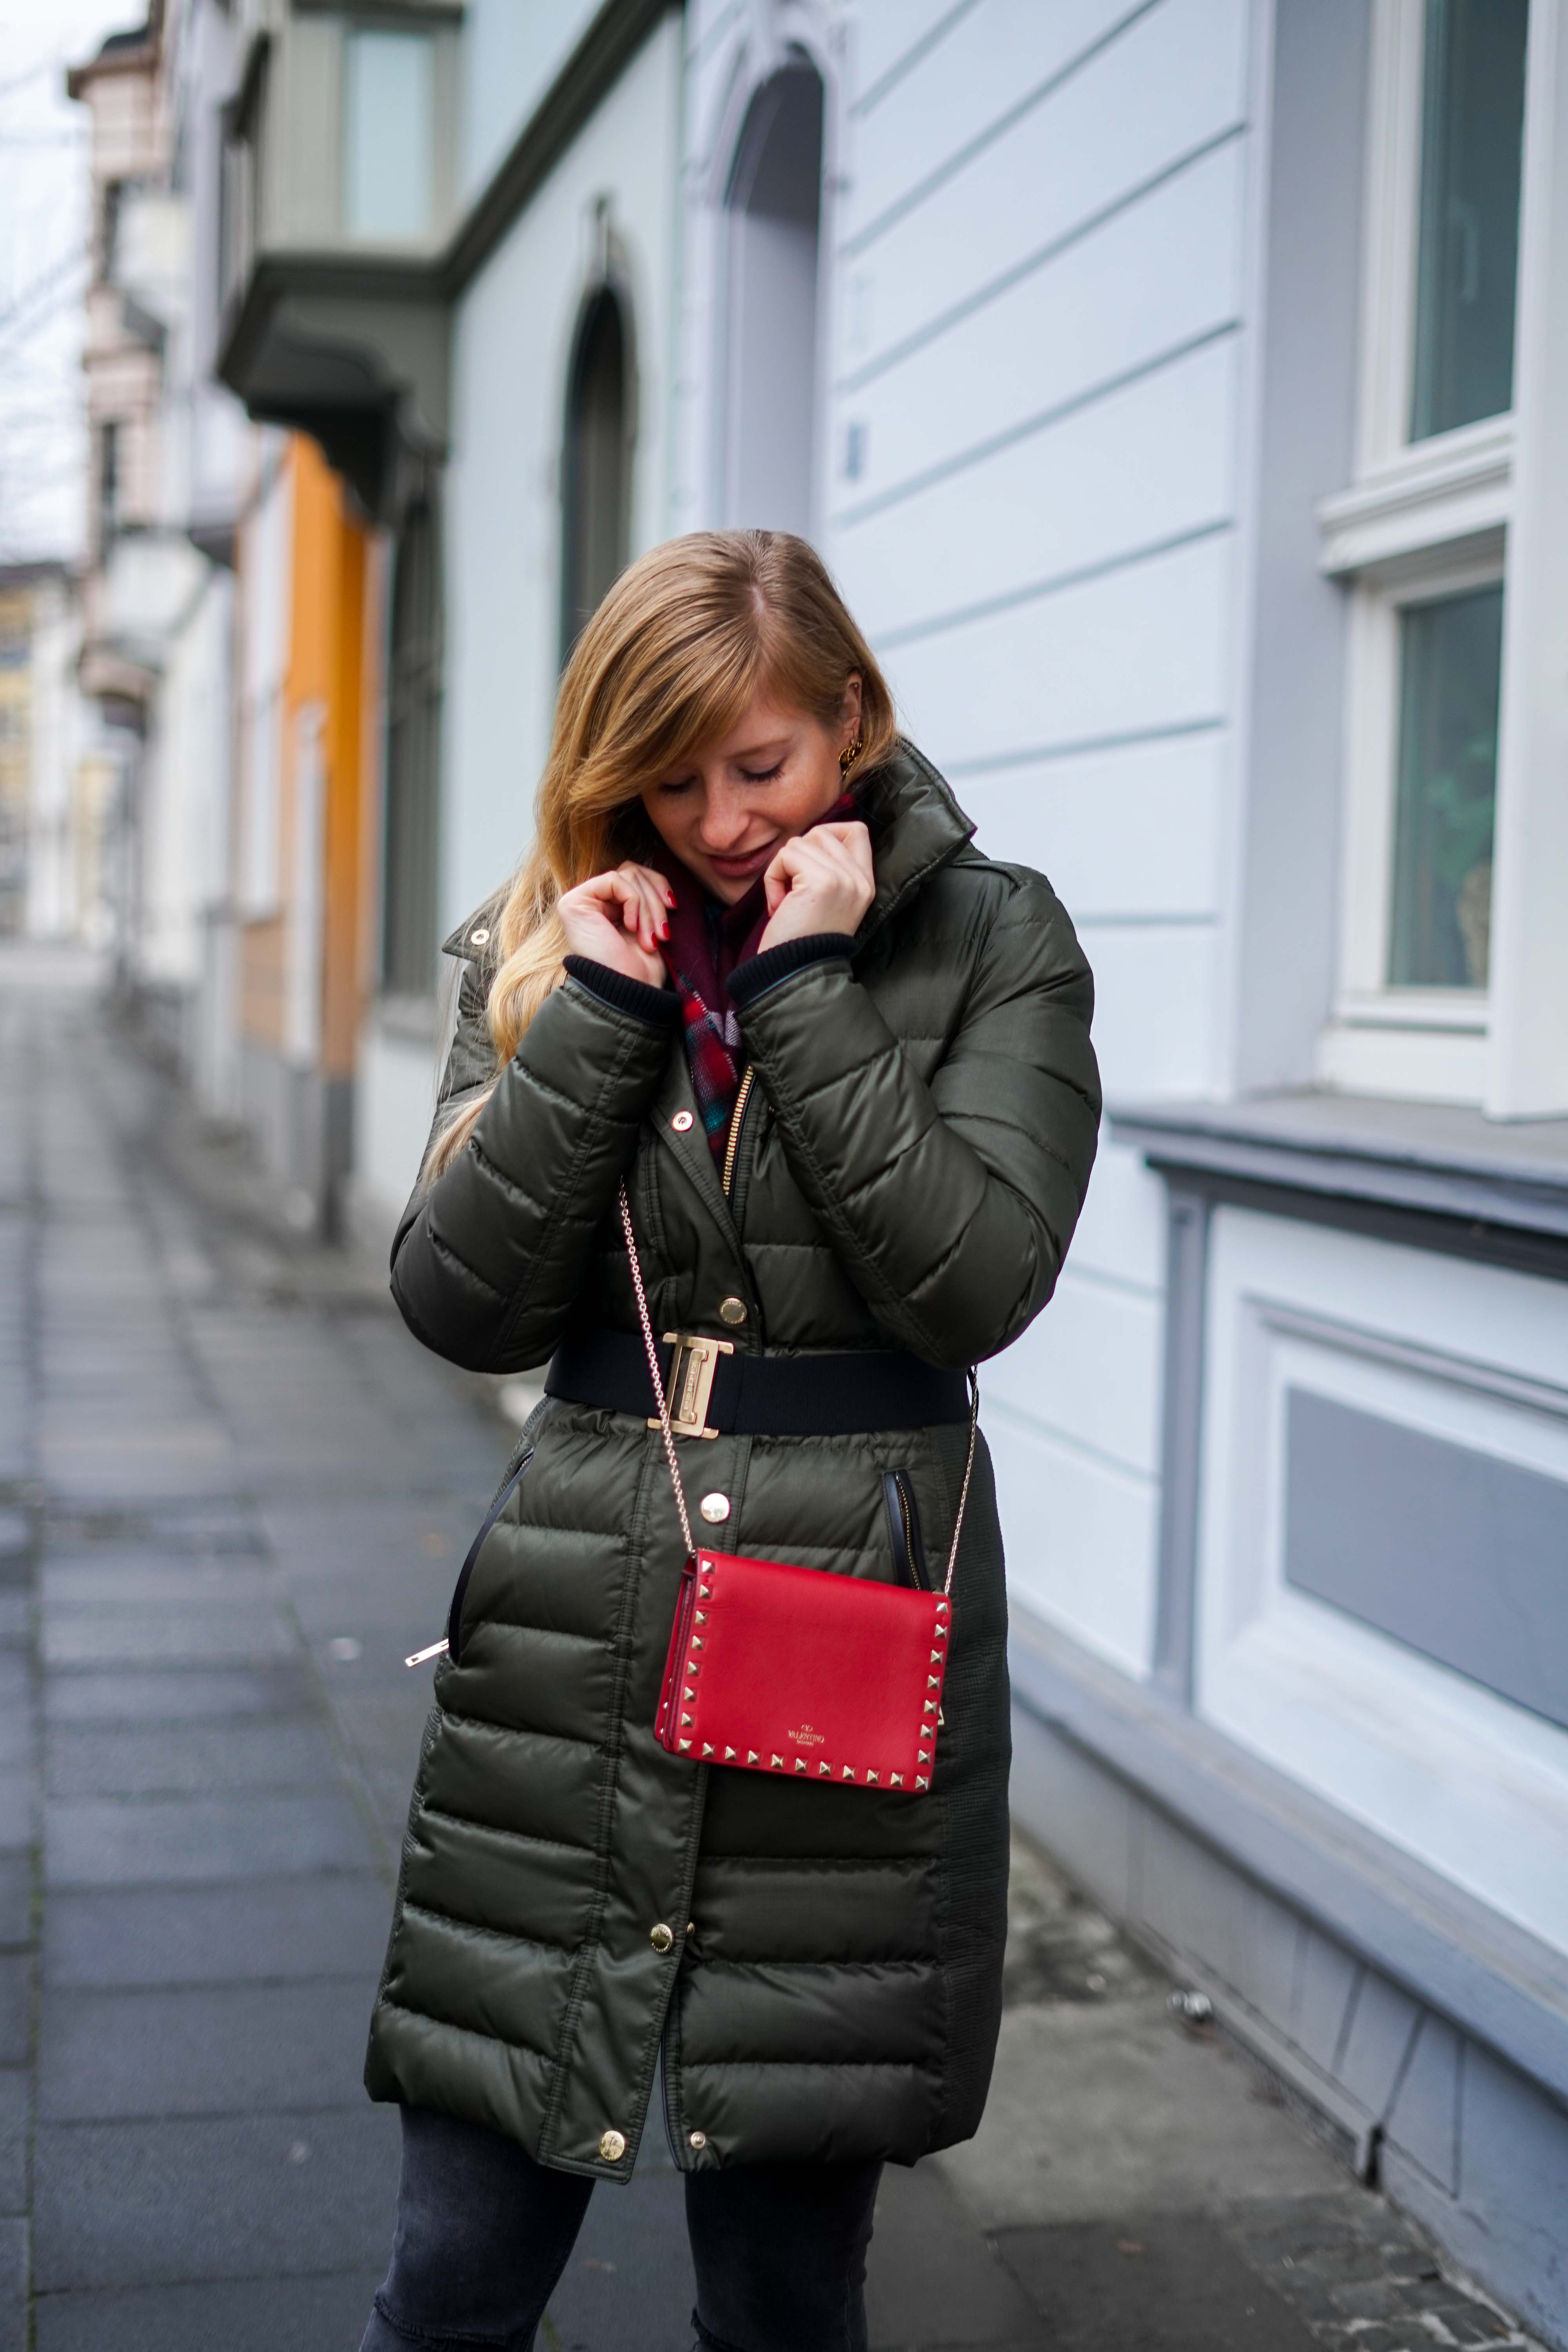 Burberry Winterjacke Grün Modeblog Winter Outfit Bonn Rote Tasche Valentino kombinieren 6